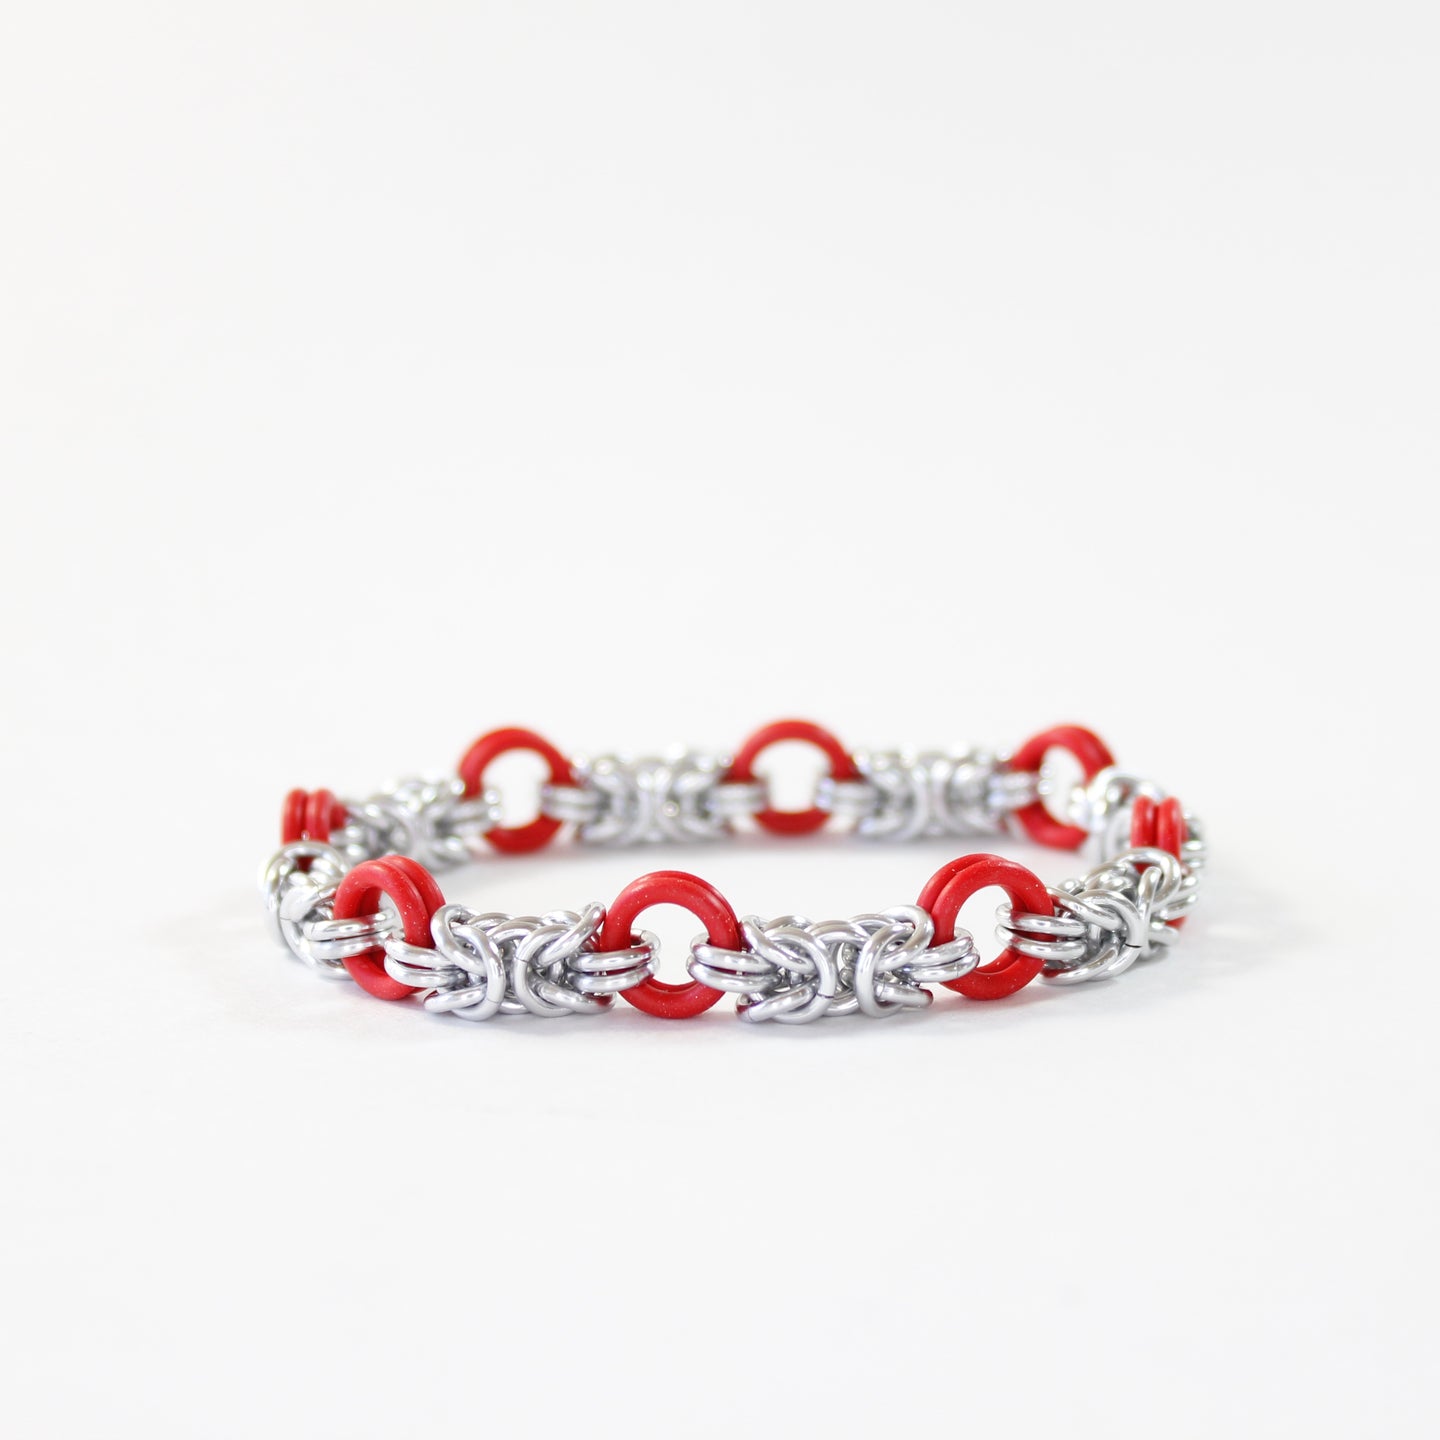 The Byz Stretch Bracelet in Red + Silver